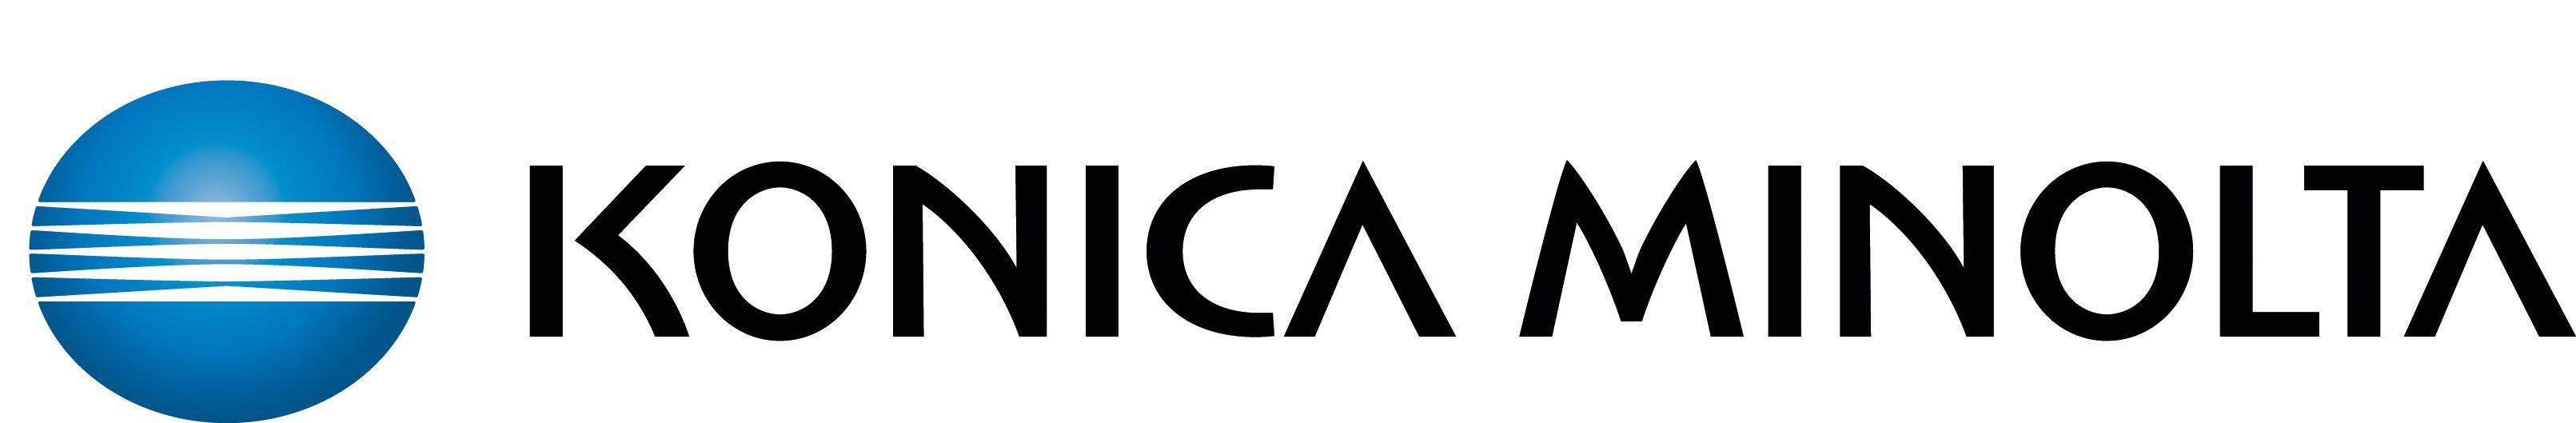 Konica Minolta Logo - Konica Minolta Strengthens its Presence in Alabama with Acquisition ...